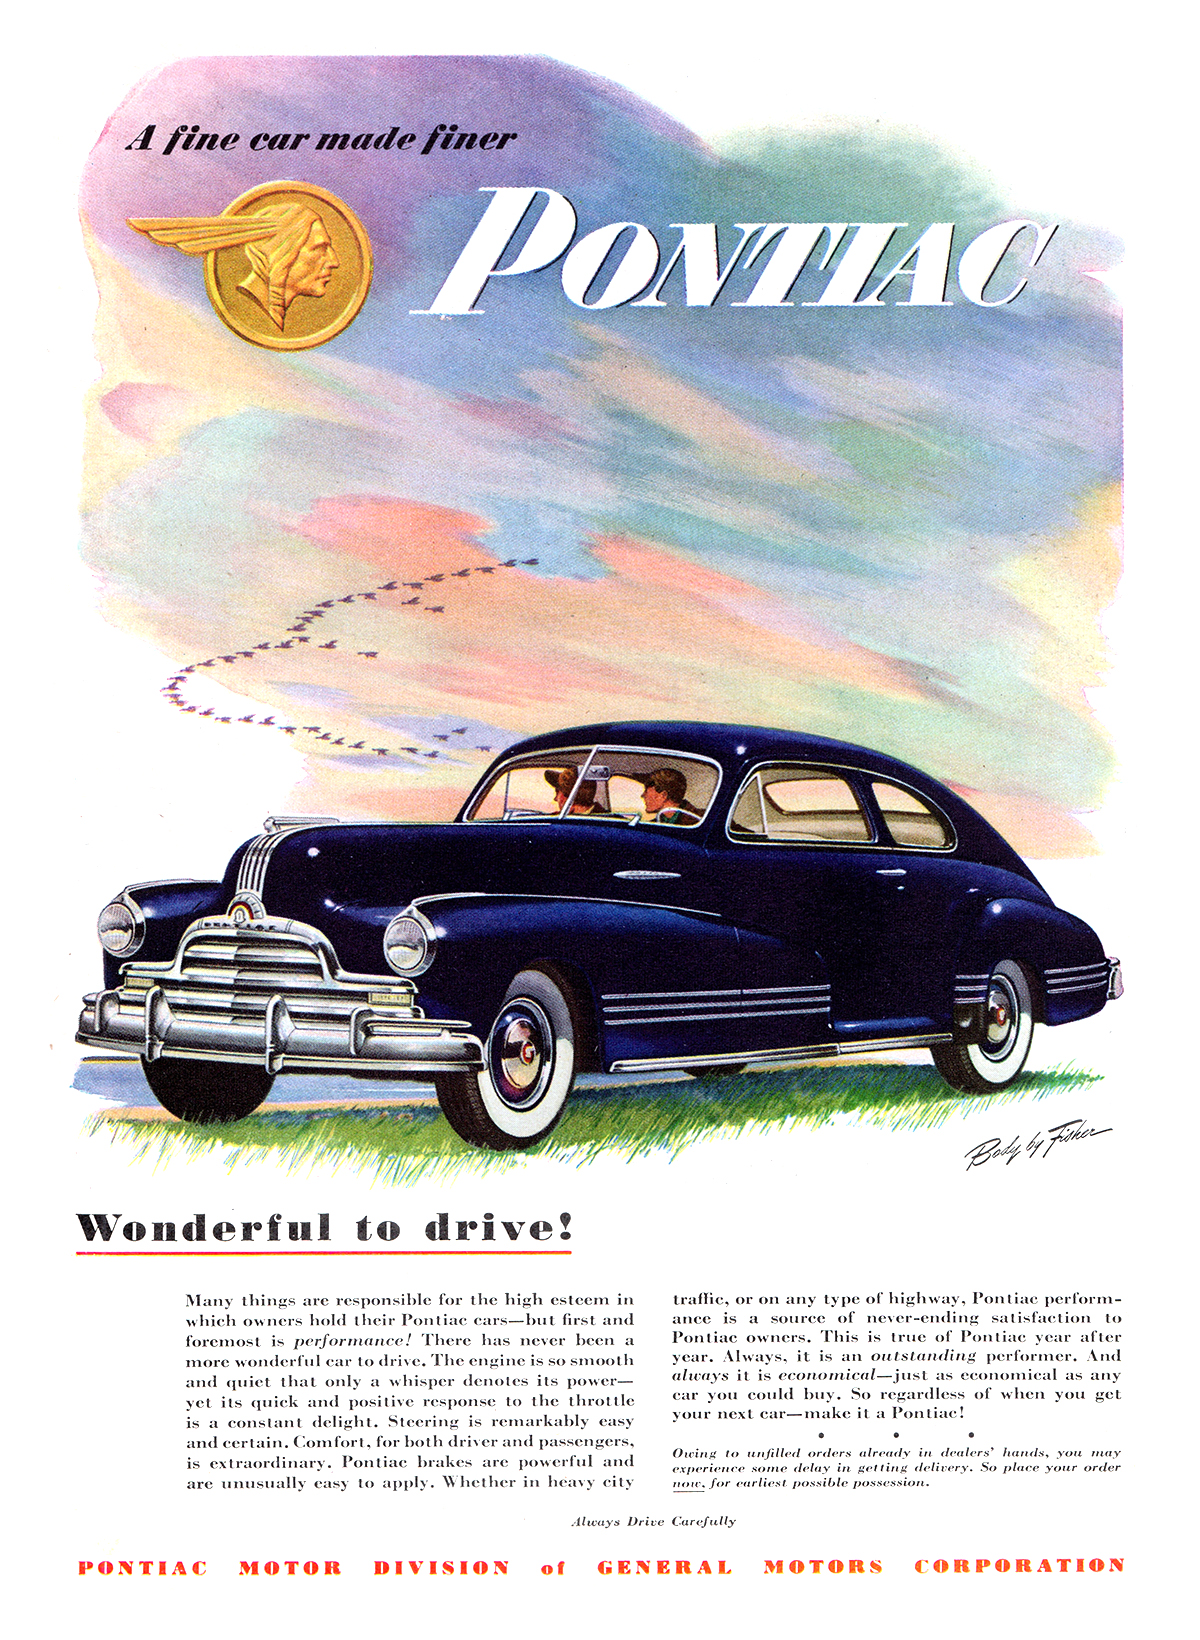 Pontiac Streamliner Sedan-Coupe Ad (November, 1947): Wonderful to drive!